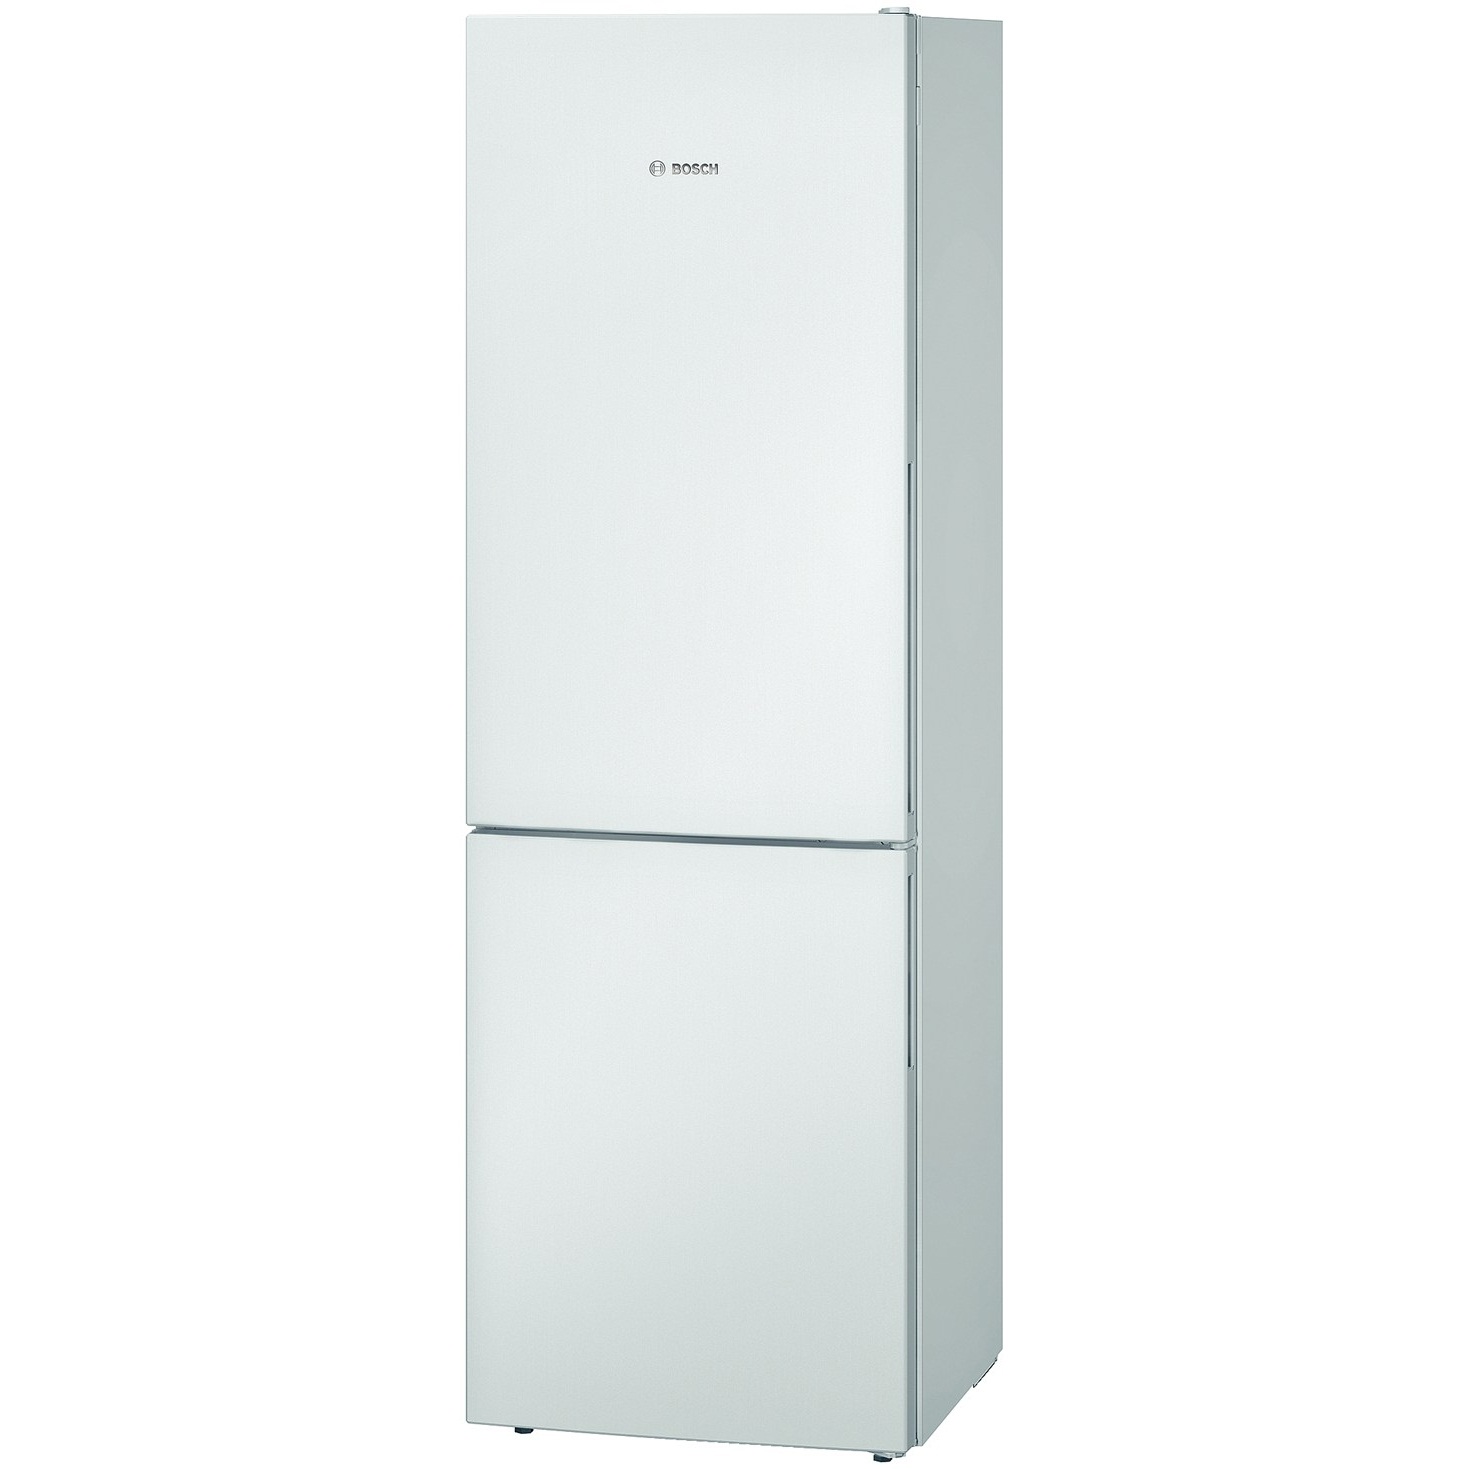  Combina frigorifica Bosch KGV36VW32, 309 l, Clasa A++, Alb 